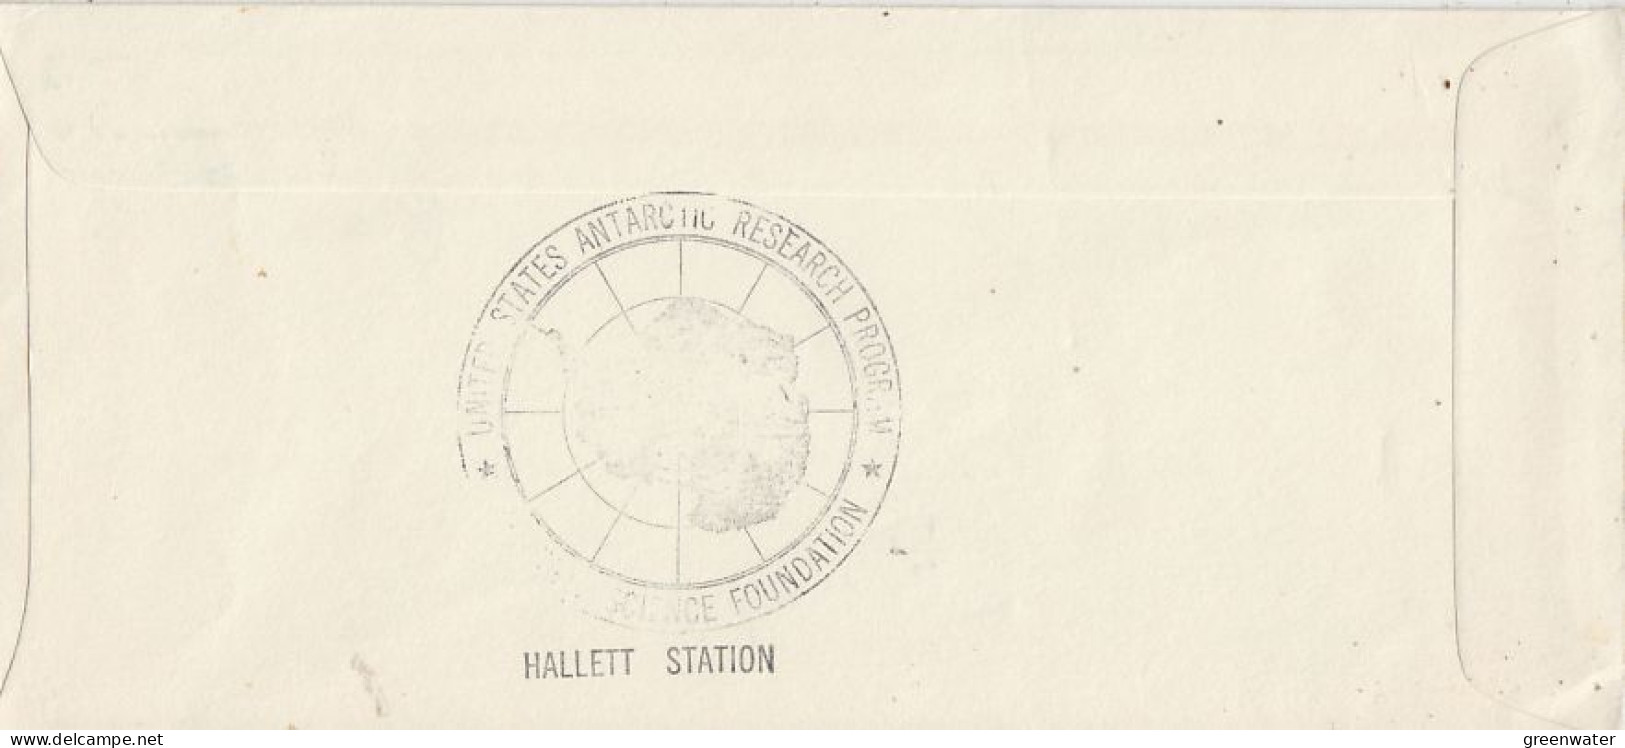 Ross Dependency Adare Station IGY NZ Antarctic Research Exp. Cape Hallett Ca Scott Base 23 DEC 1963 (RO187) - Internationales Geophysikalisches Jahr